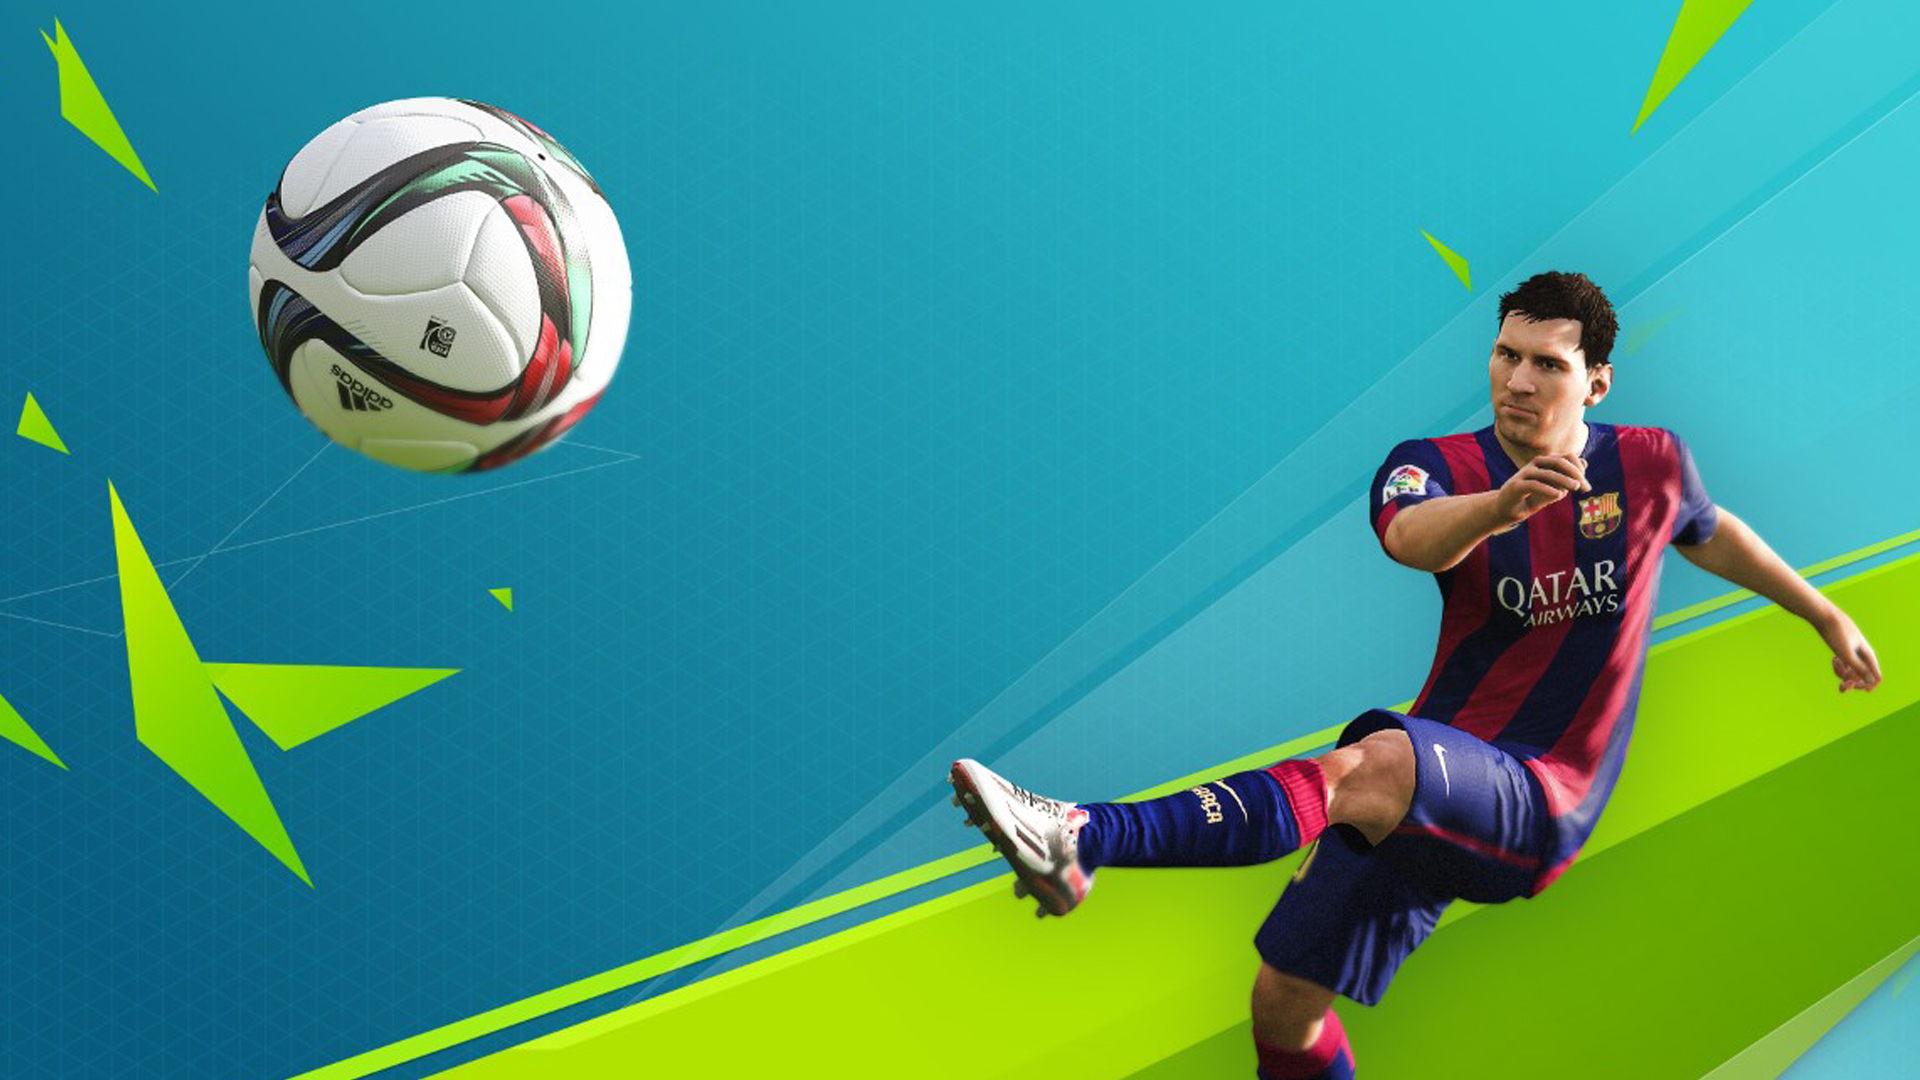 fifa 16 wallpaper,sports,football,soccer ball,football player,ball